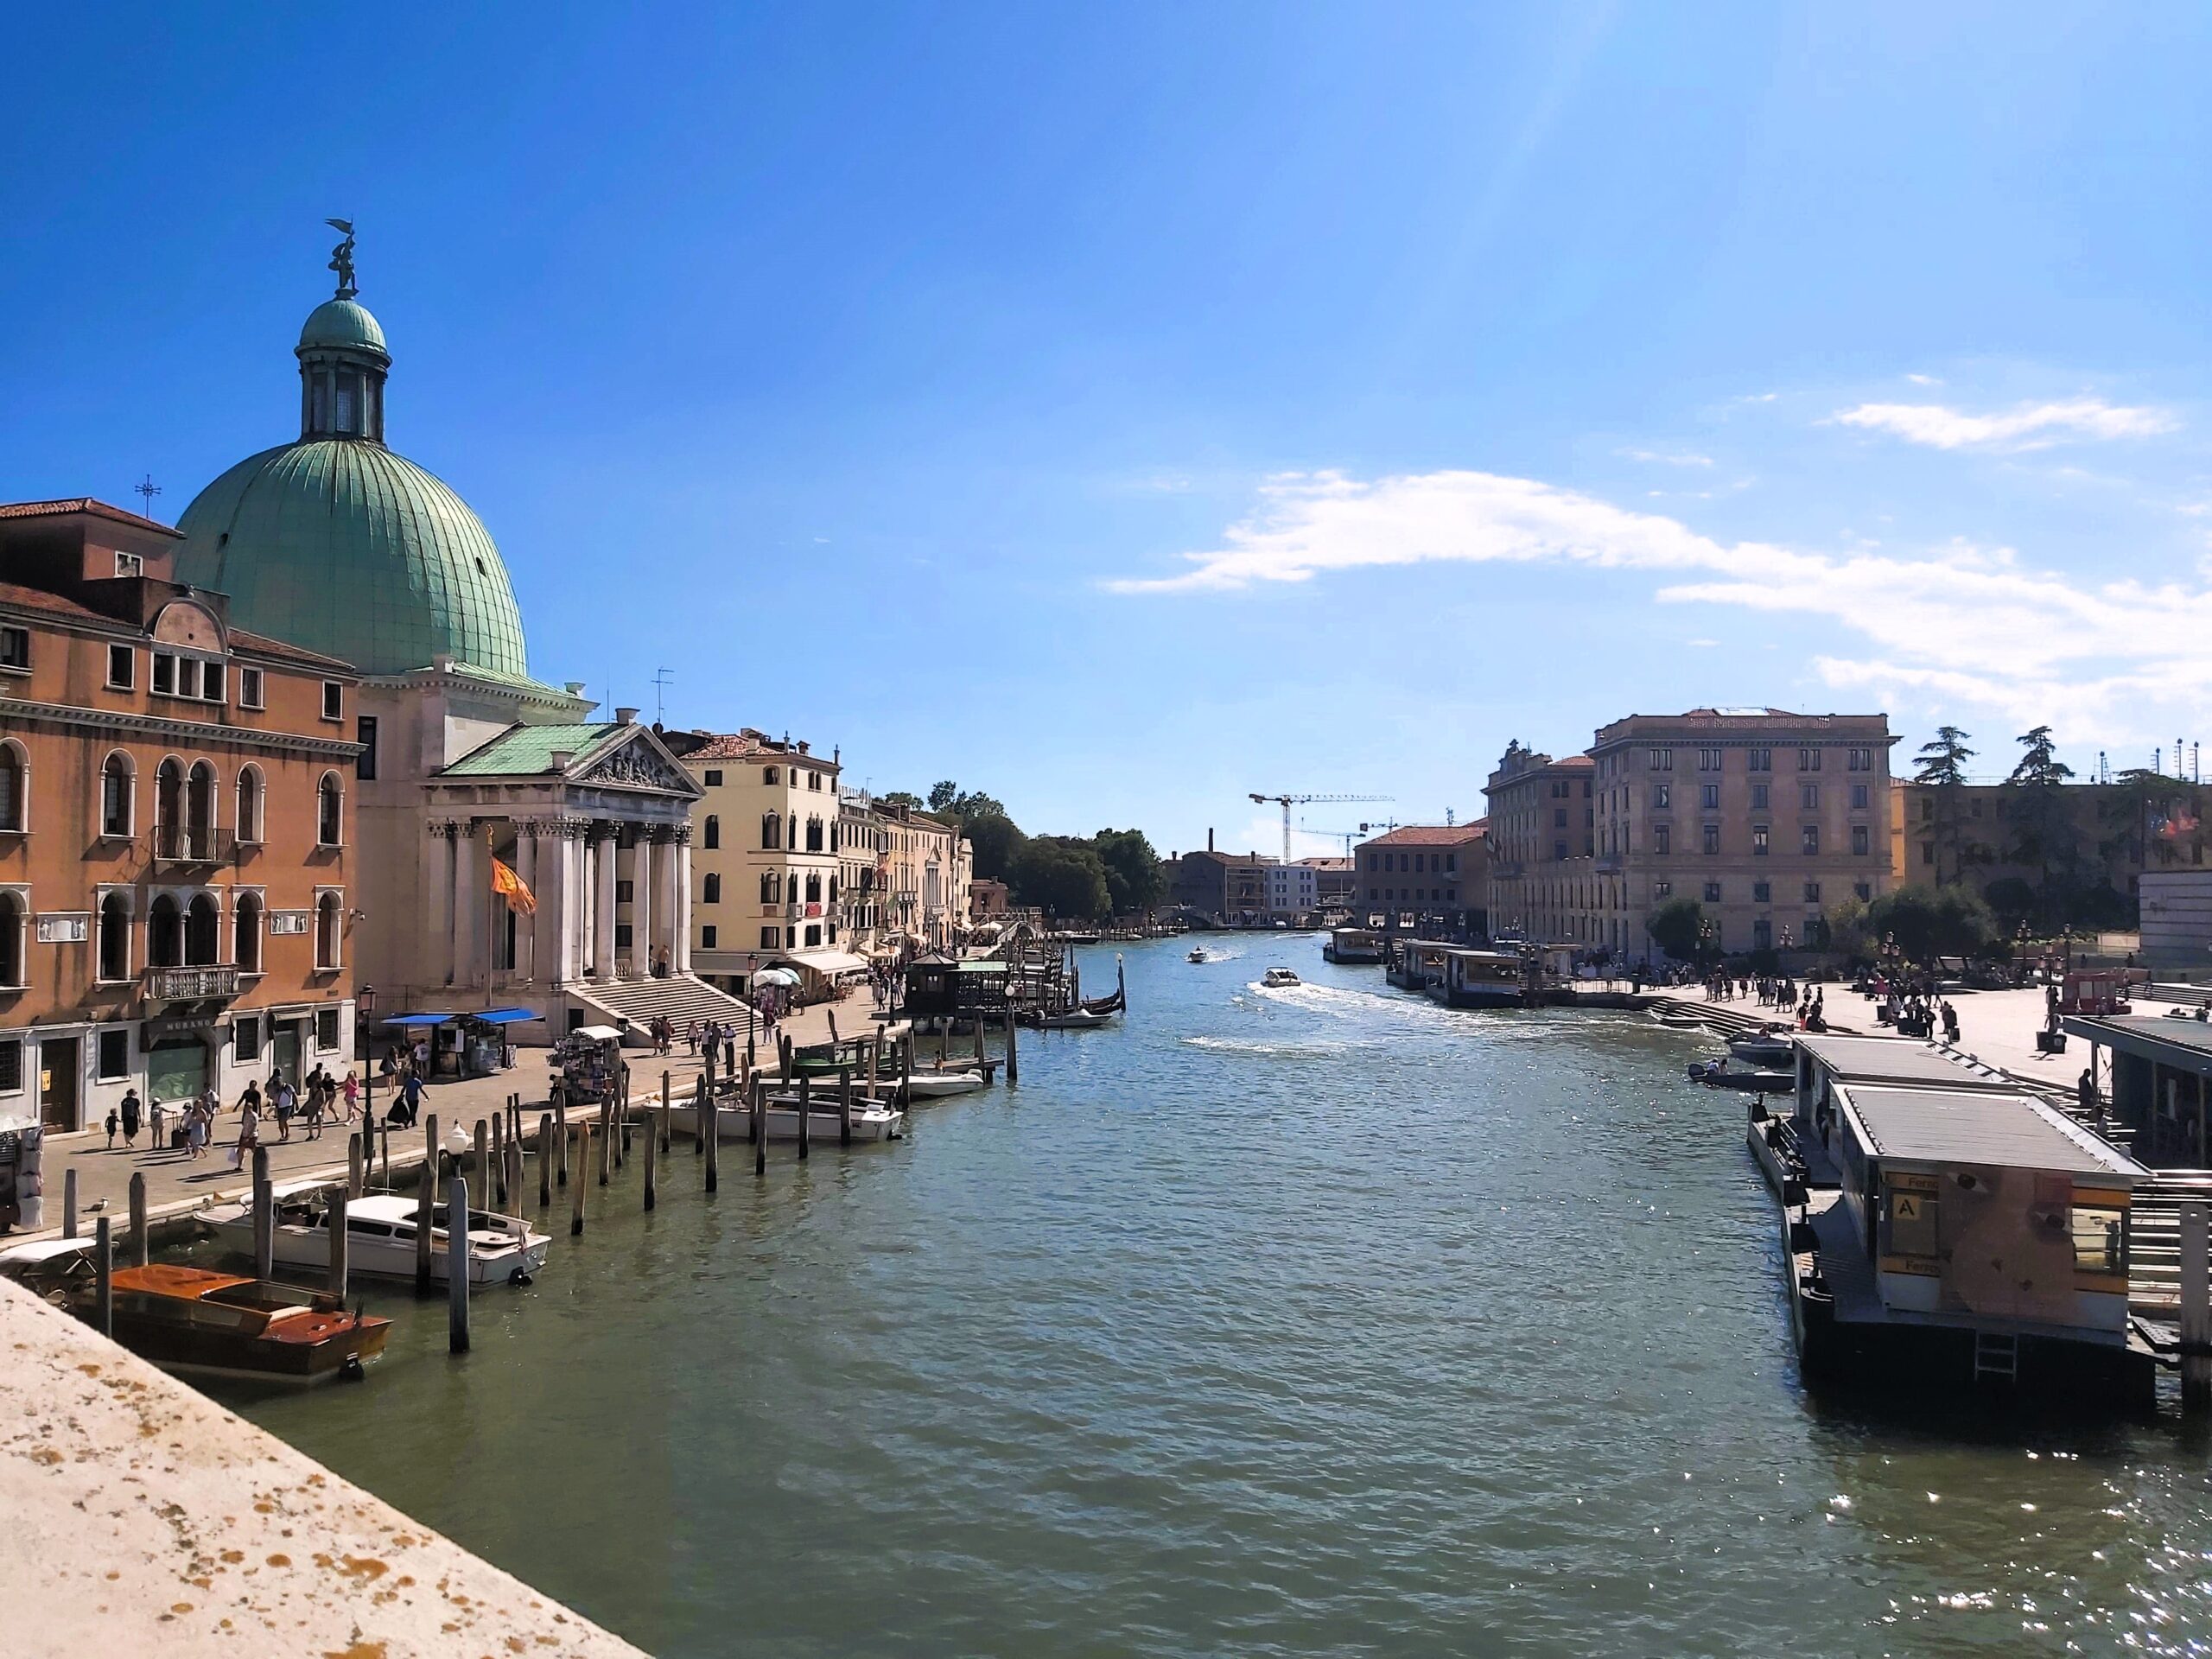 A view of Santa María della Salute and its columns in Venice, Italy